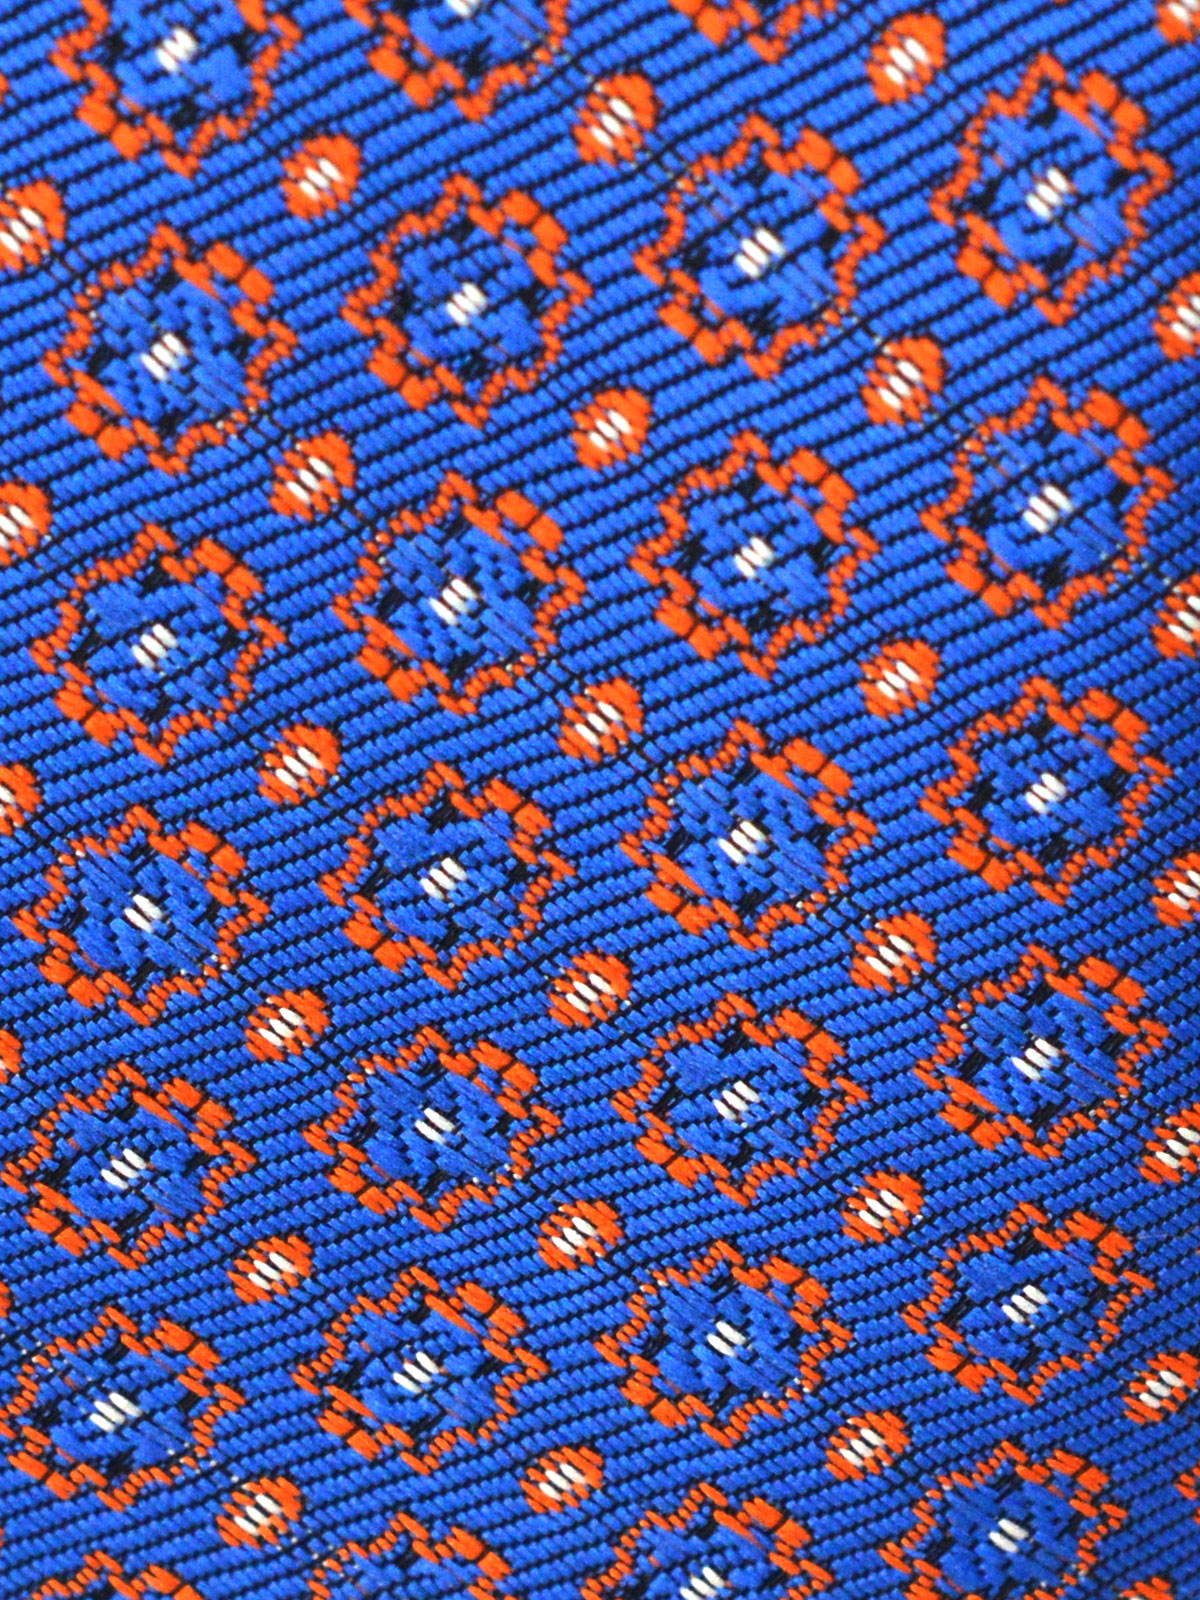  tie in blue with orange figures  - 10152 - € 14.06 img2